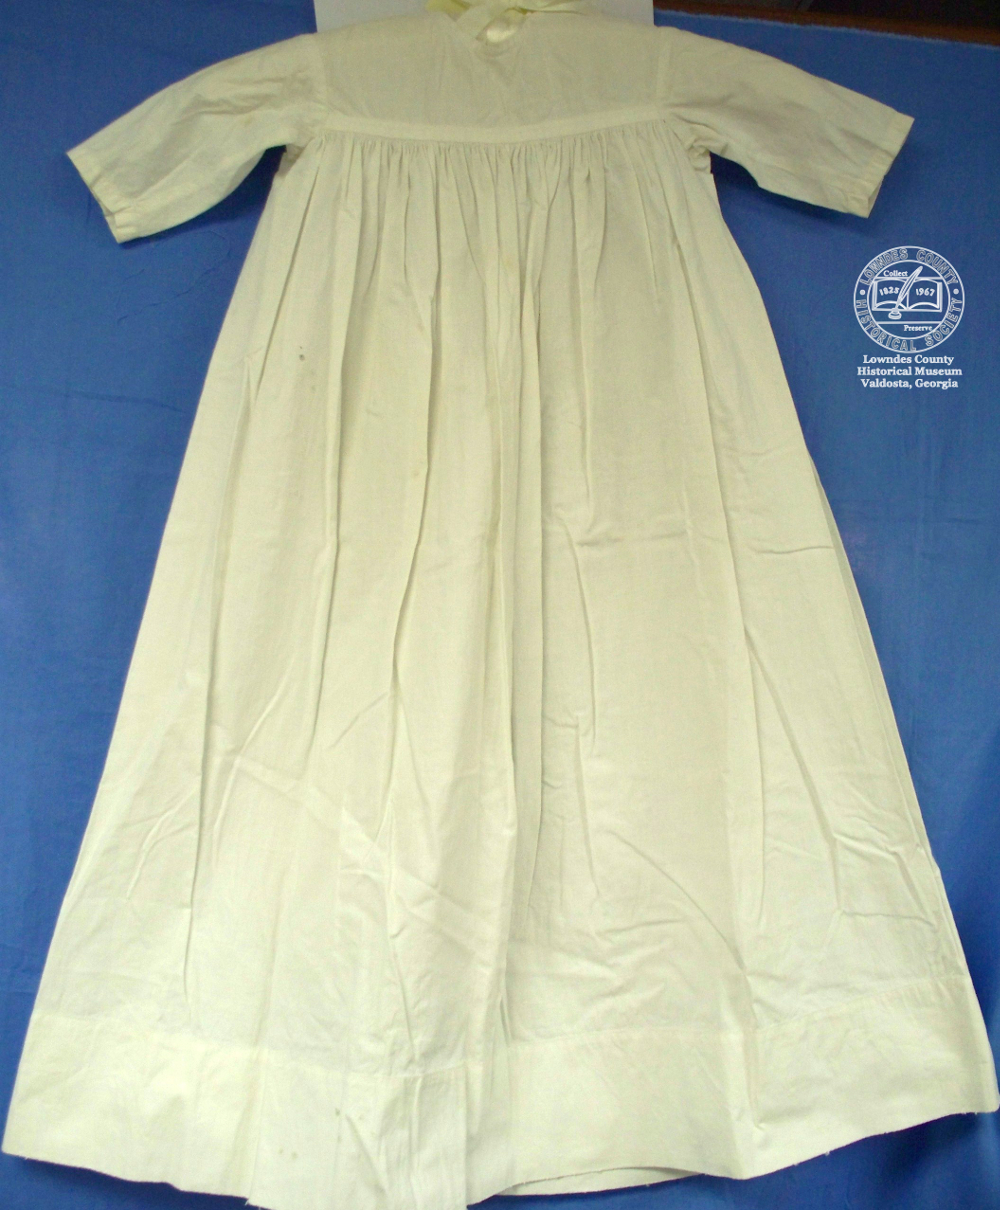 plain christening gown